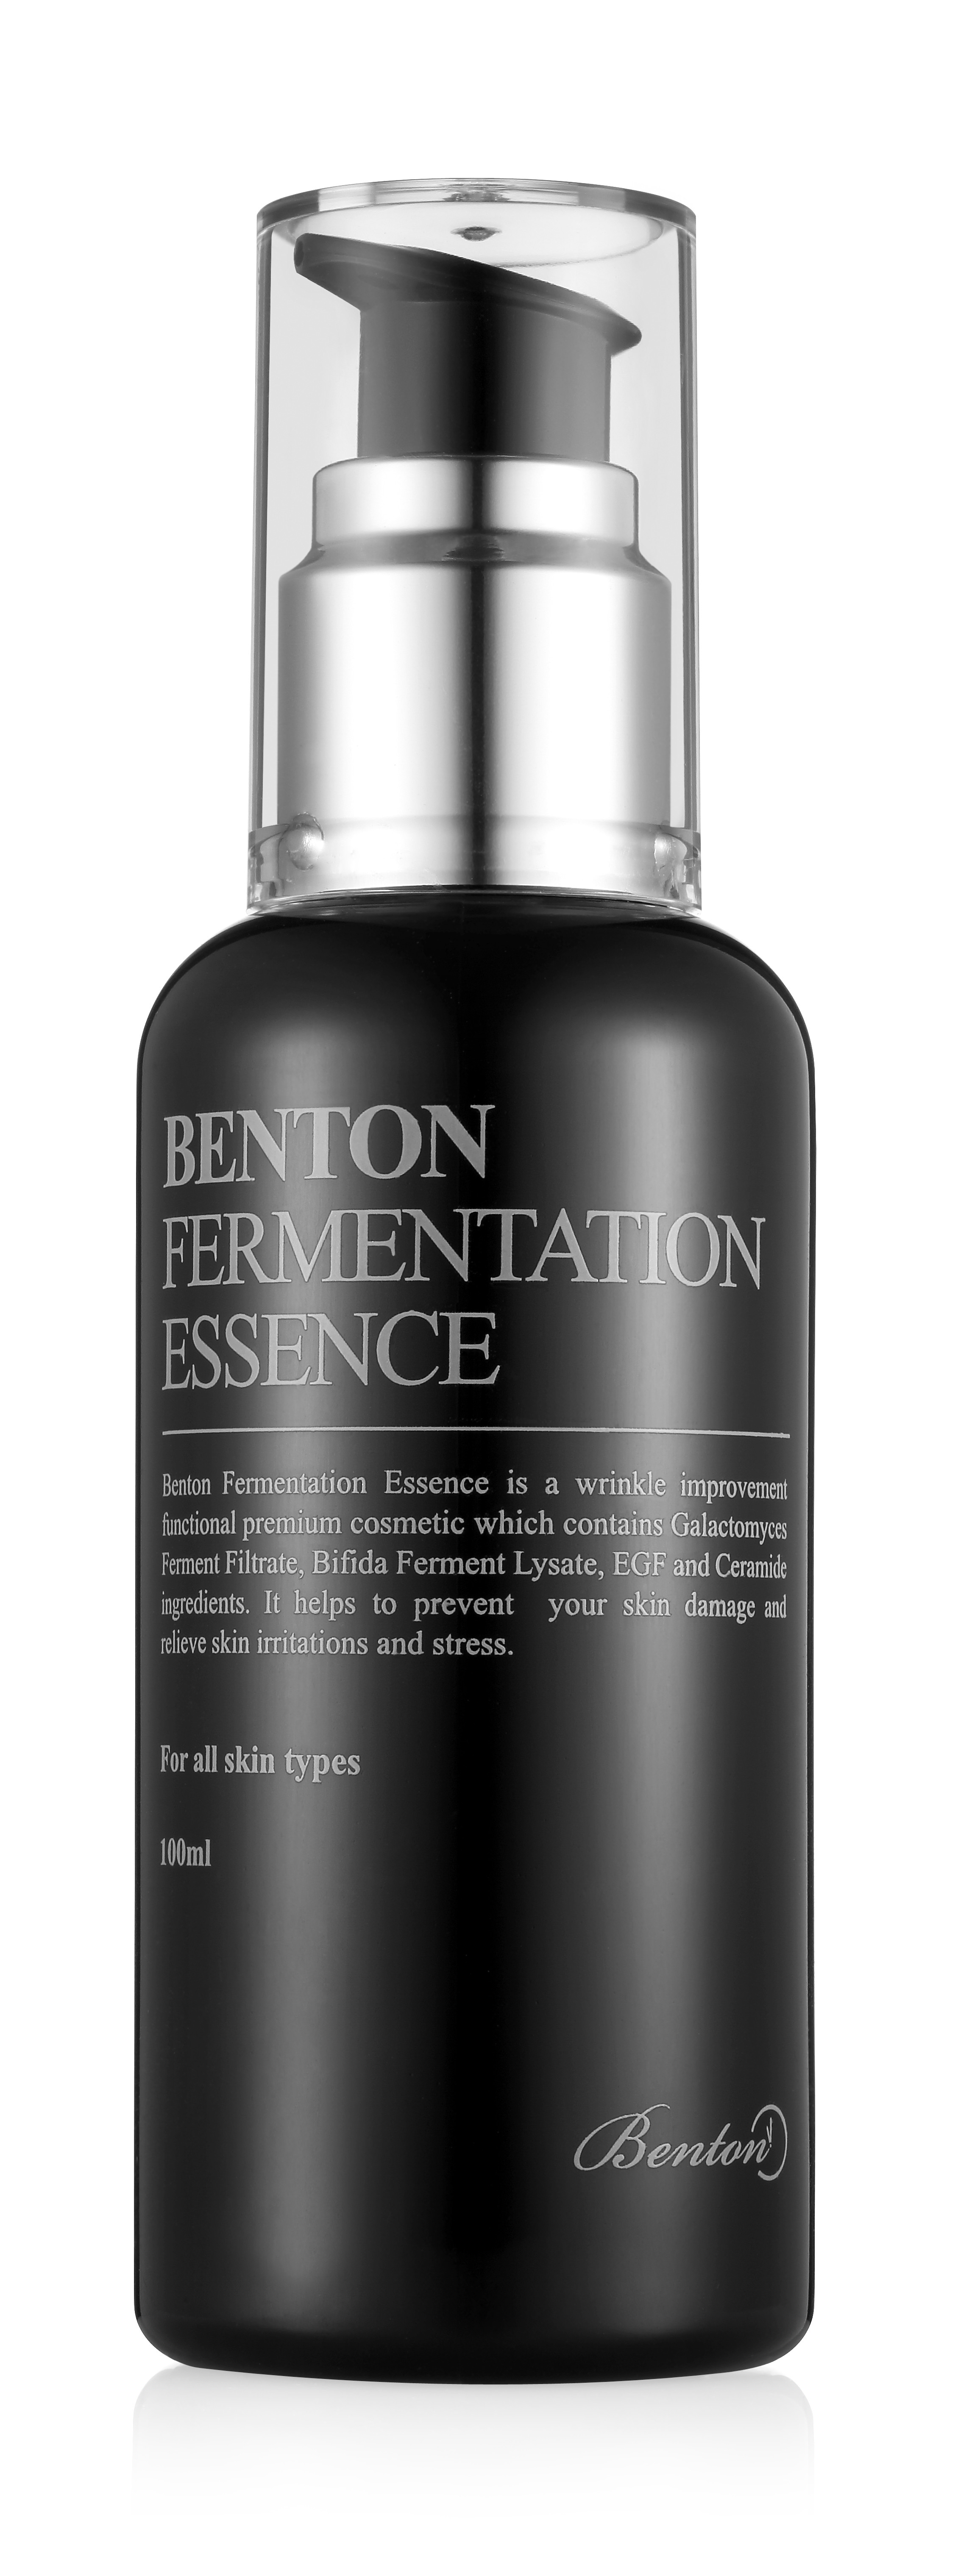 skincare-kbeauty-glowtime-benton fermentation essence